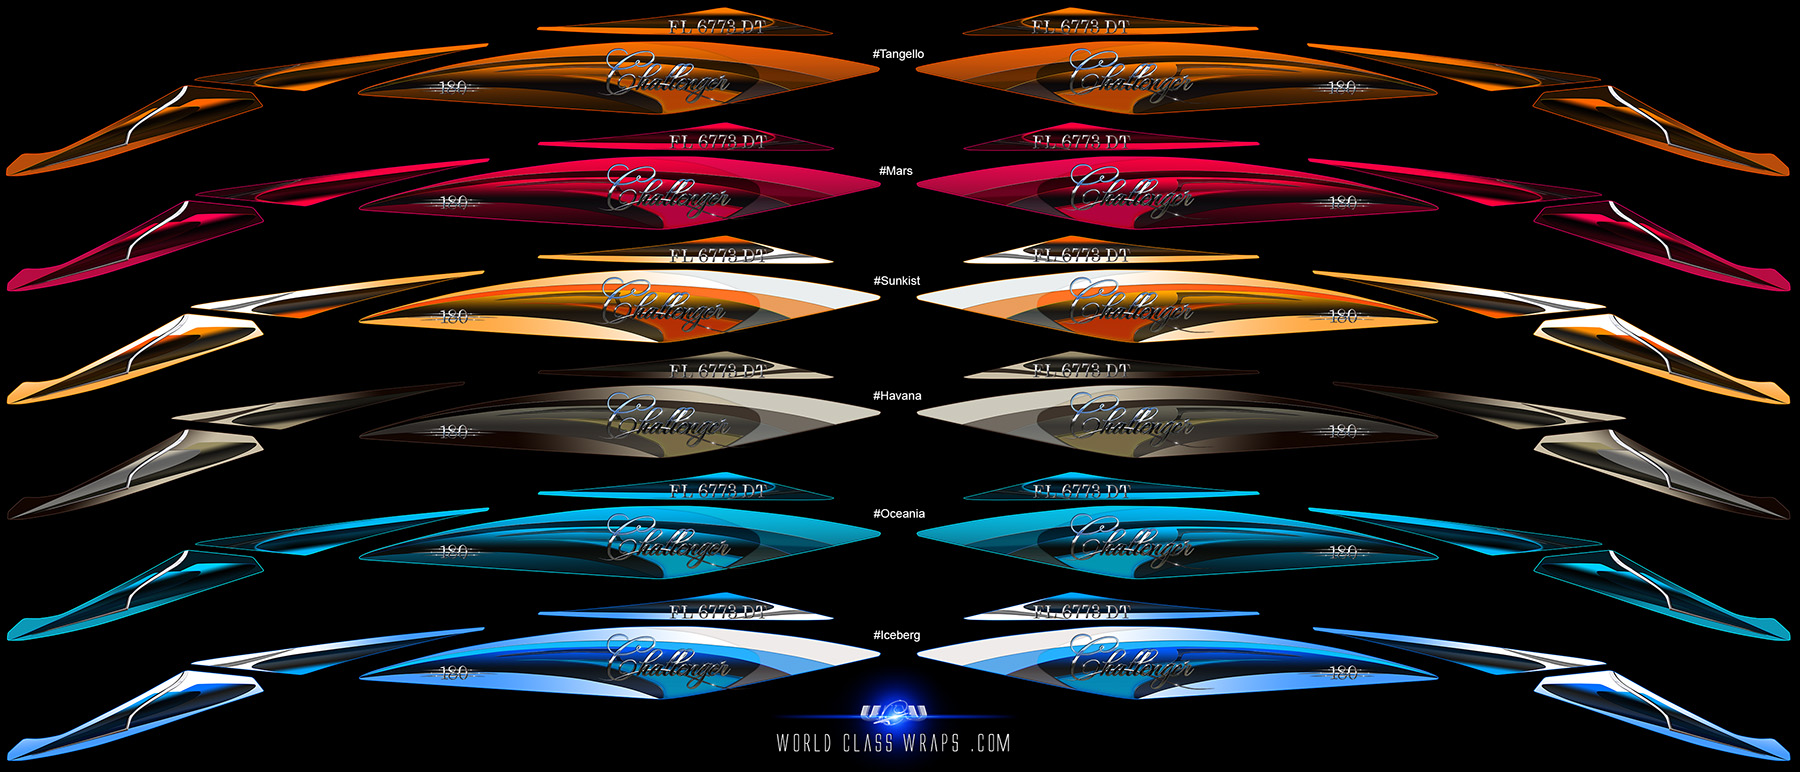 seadoo challenger 180 boat graphics image leisure series